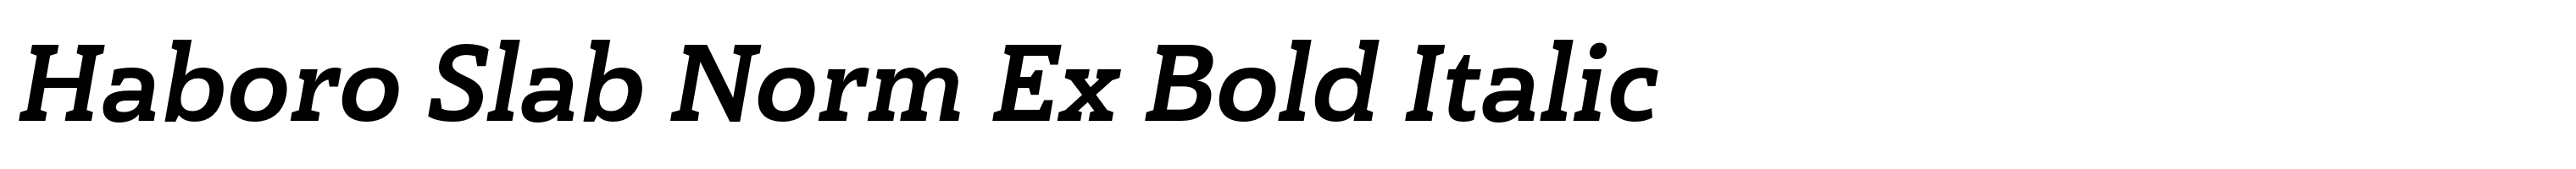 Haboro Slab Norm Ex Bold Italic